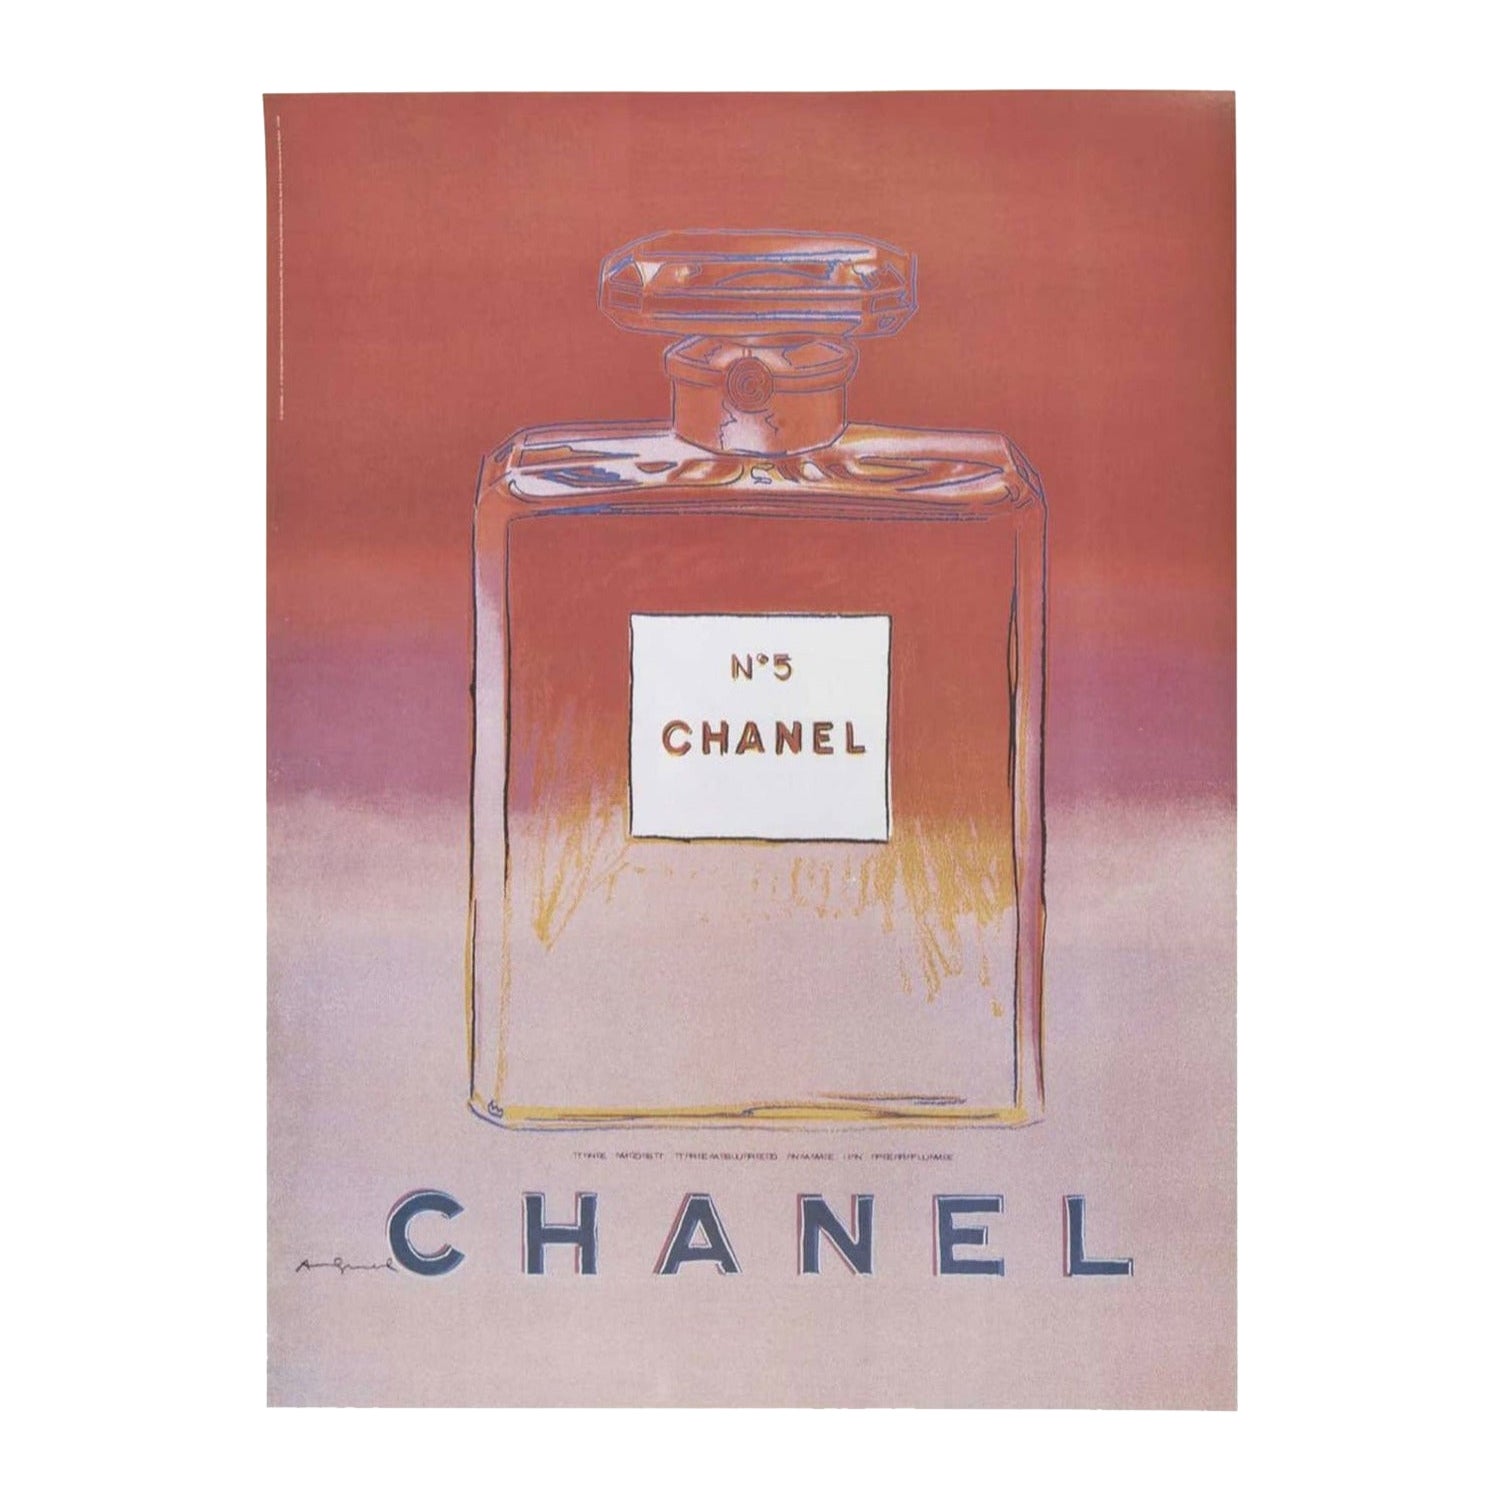 1997 Andy Warhol - Chanel Pink Original Vintage Poster For Sale